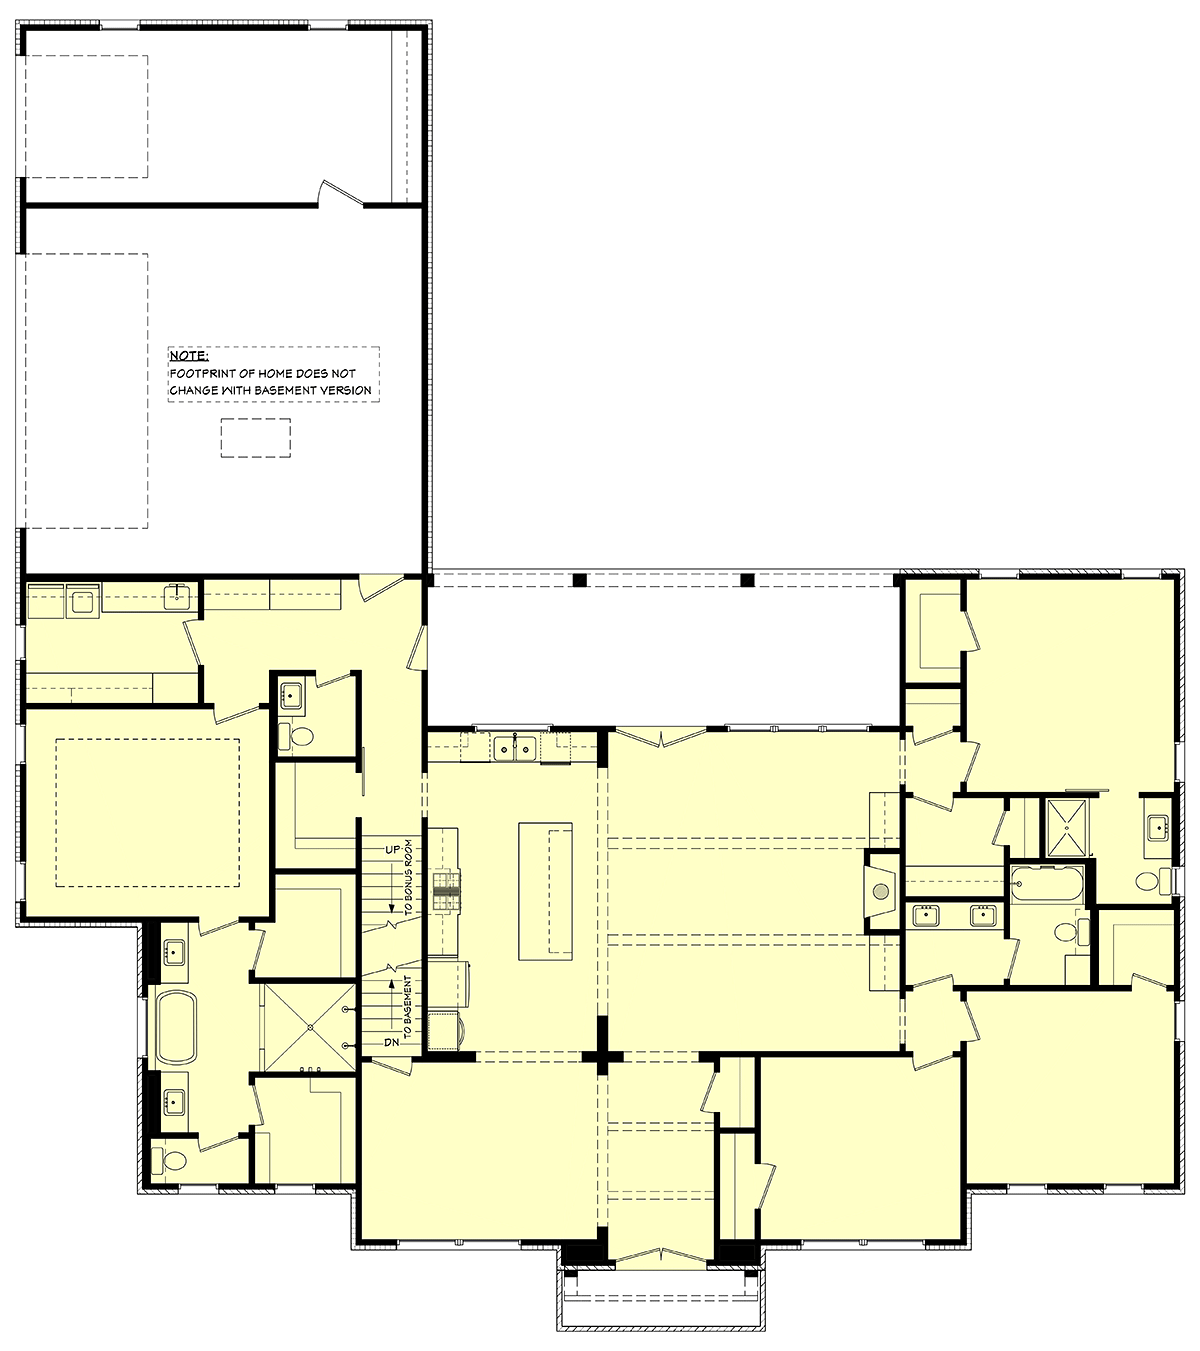 House Plan 82917 Alternate Level One